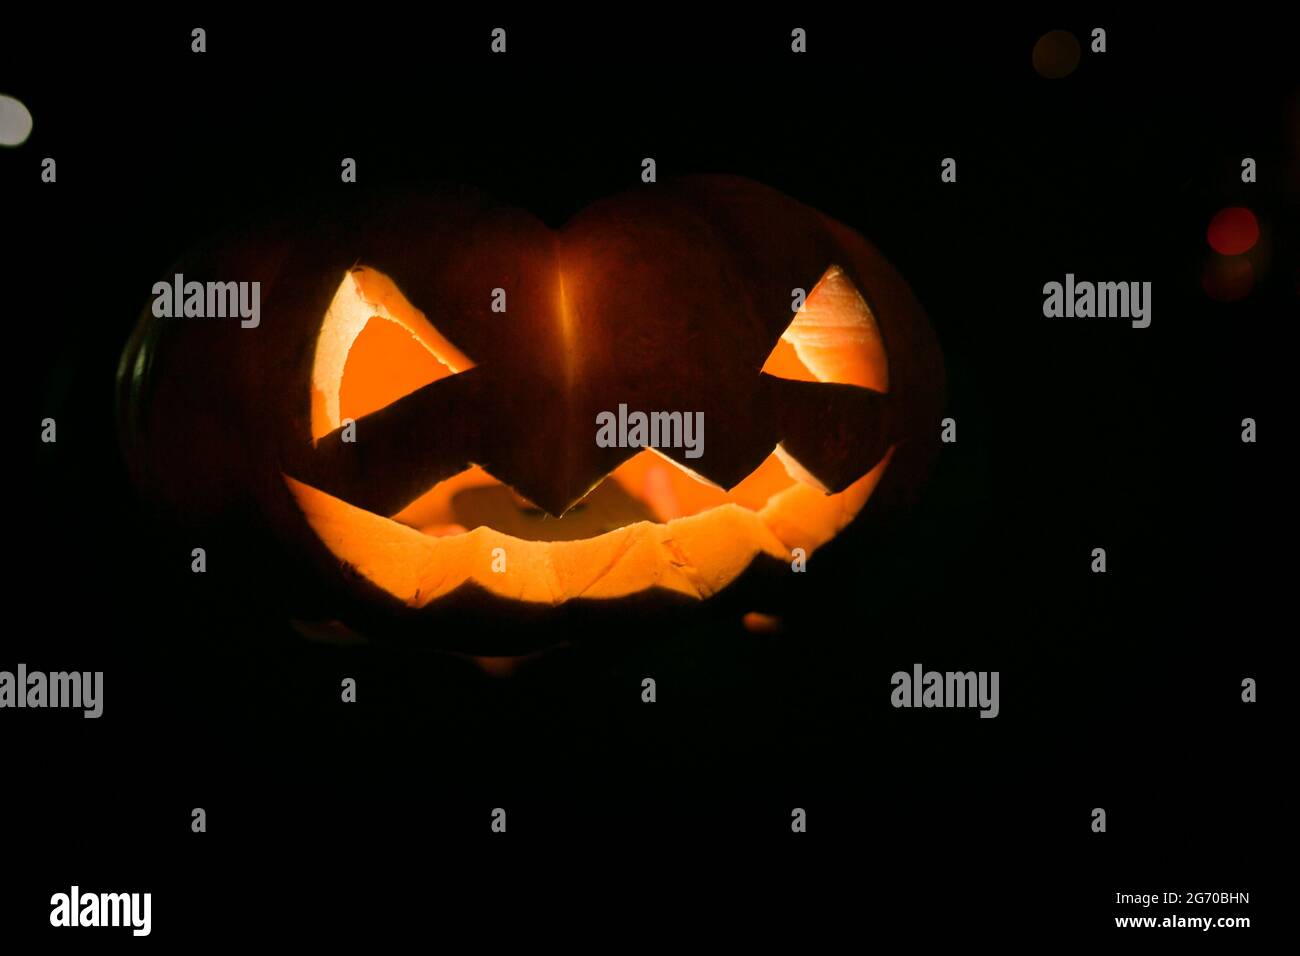 Burning halloween pumpkin head at night on dark background. Halloween dark festive background. Stock Photo